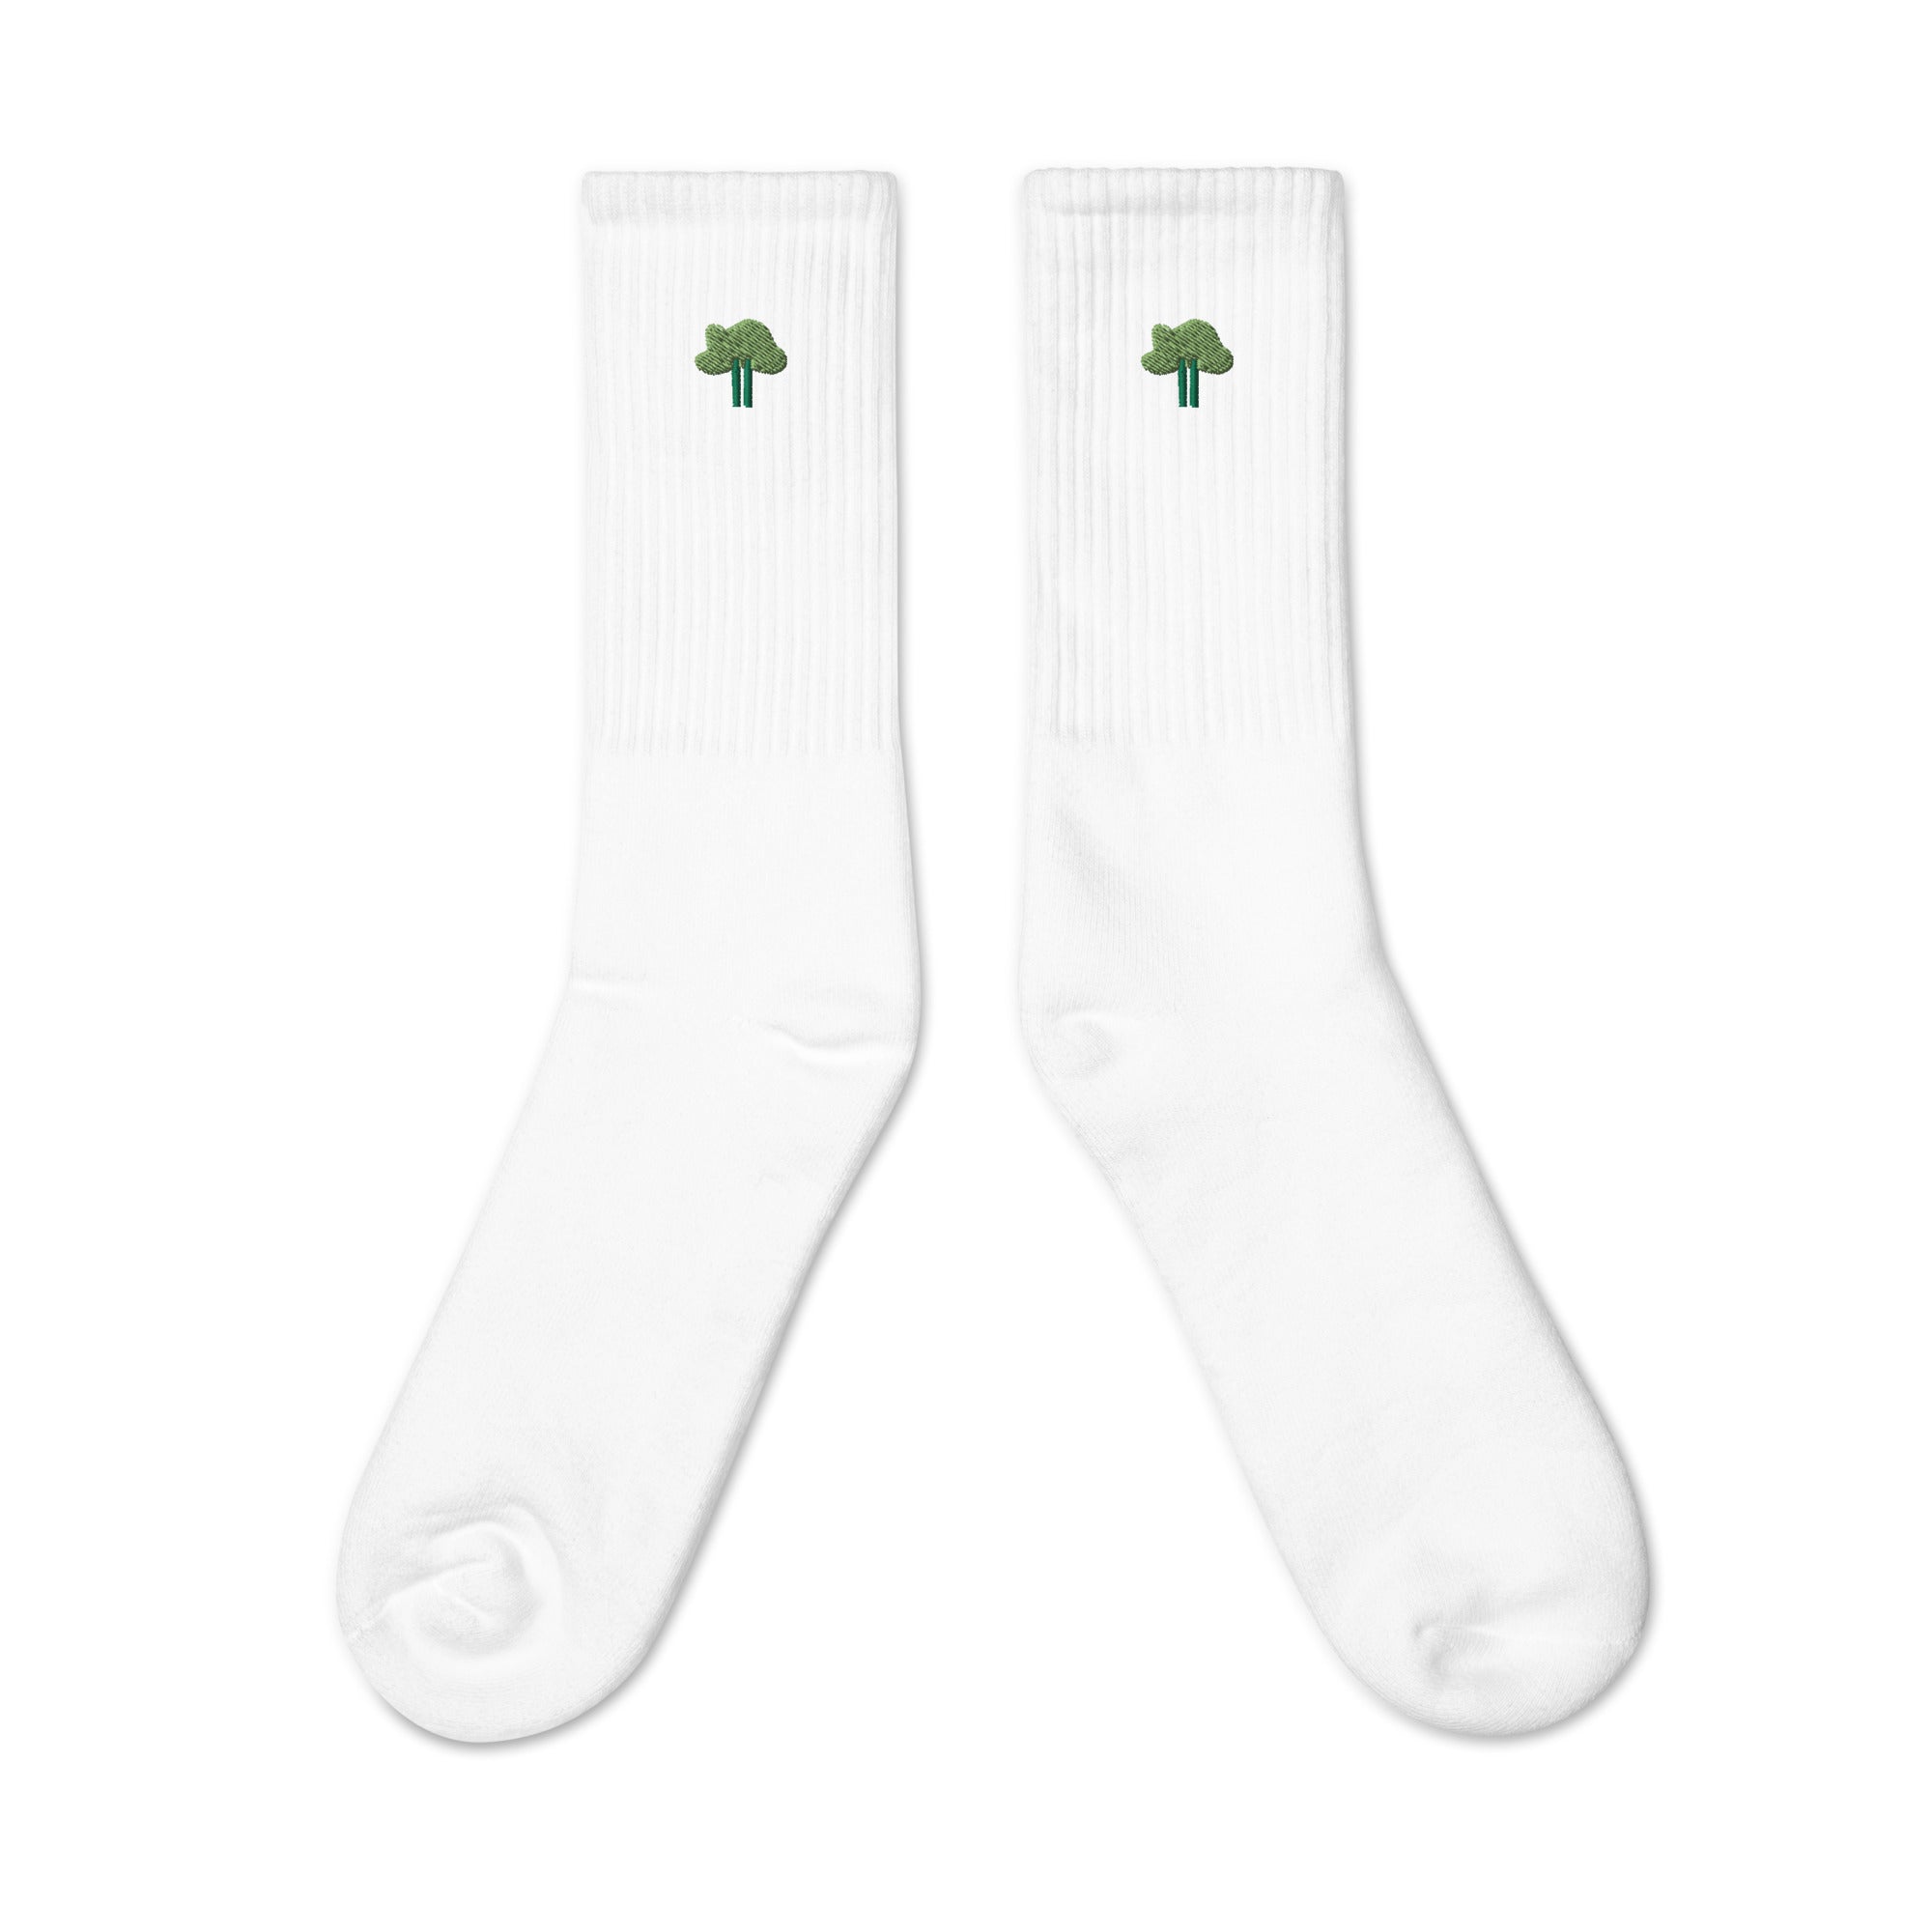 Arbolito Socks for Your Crocs